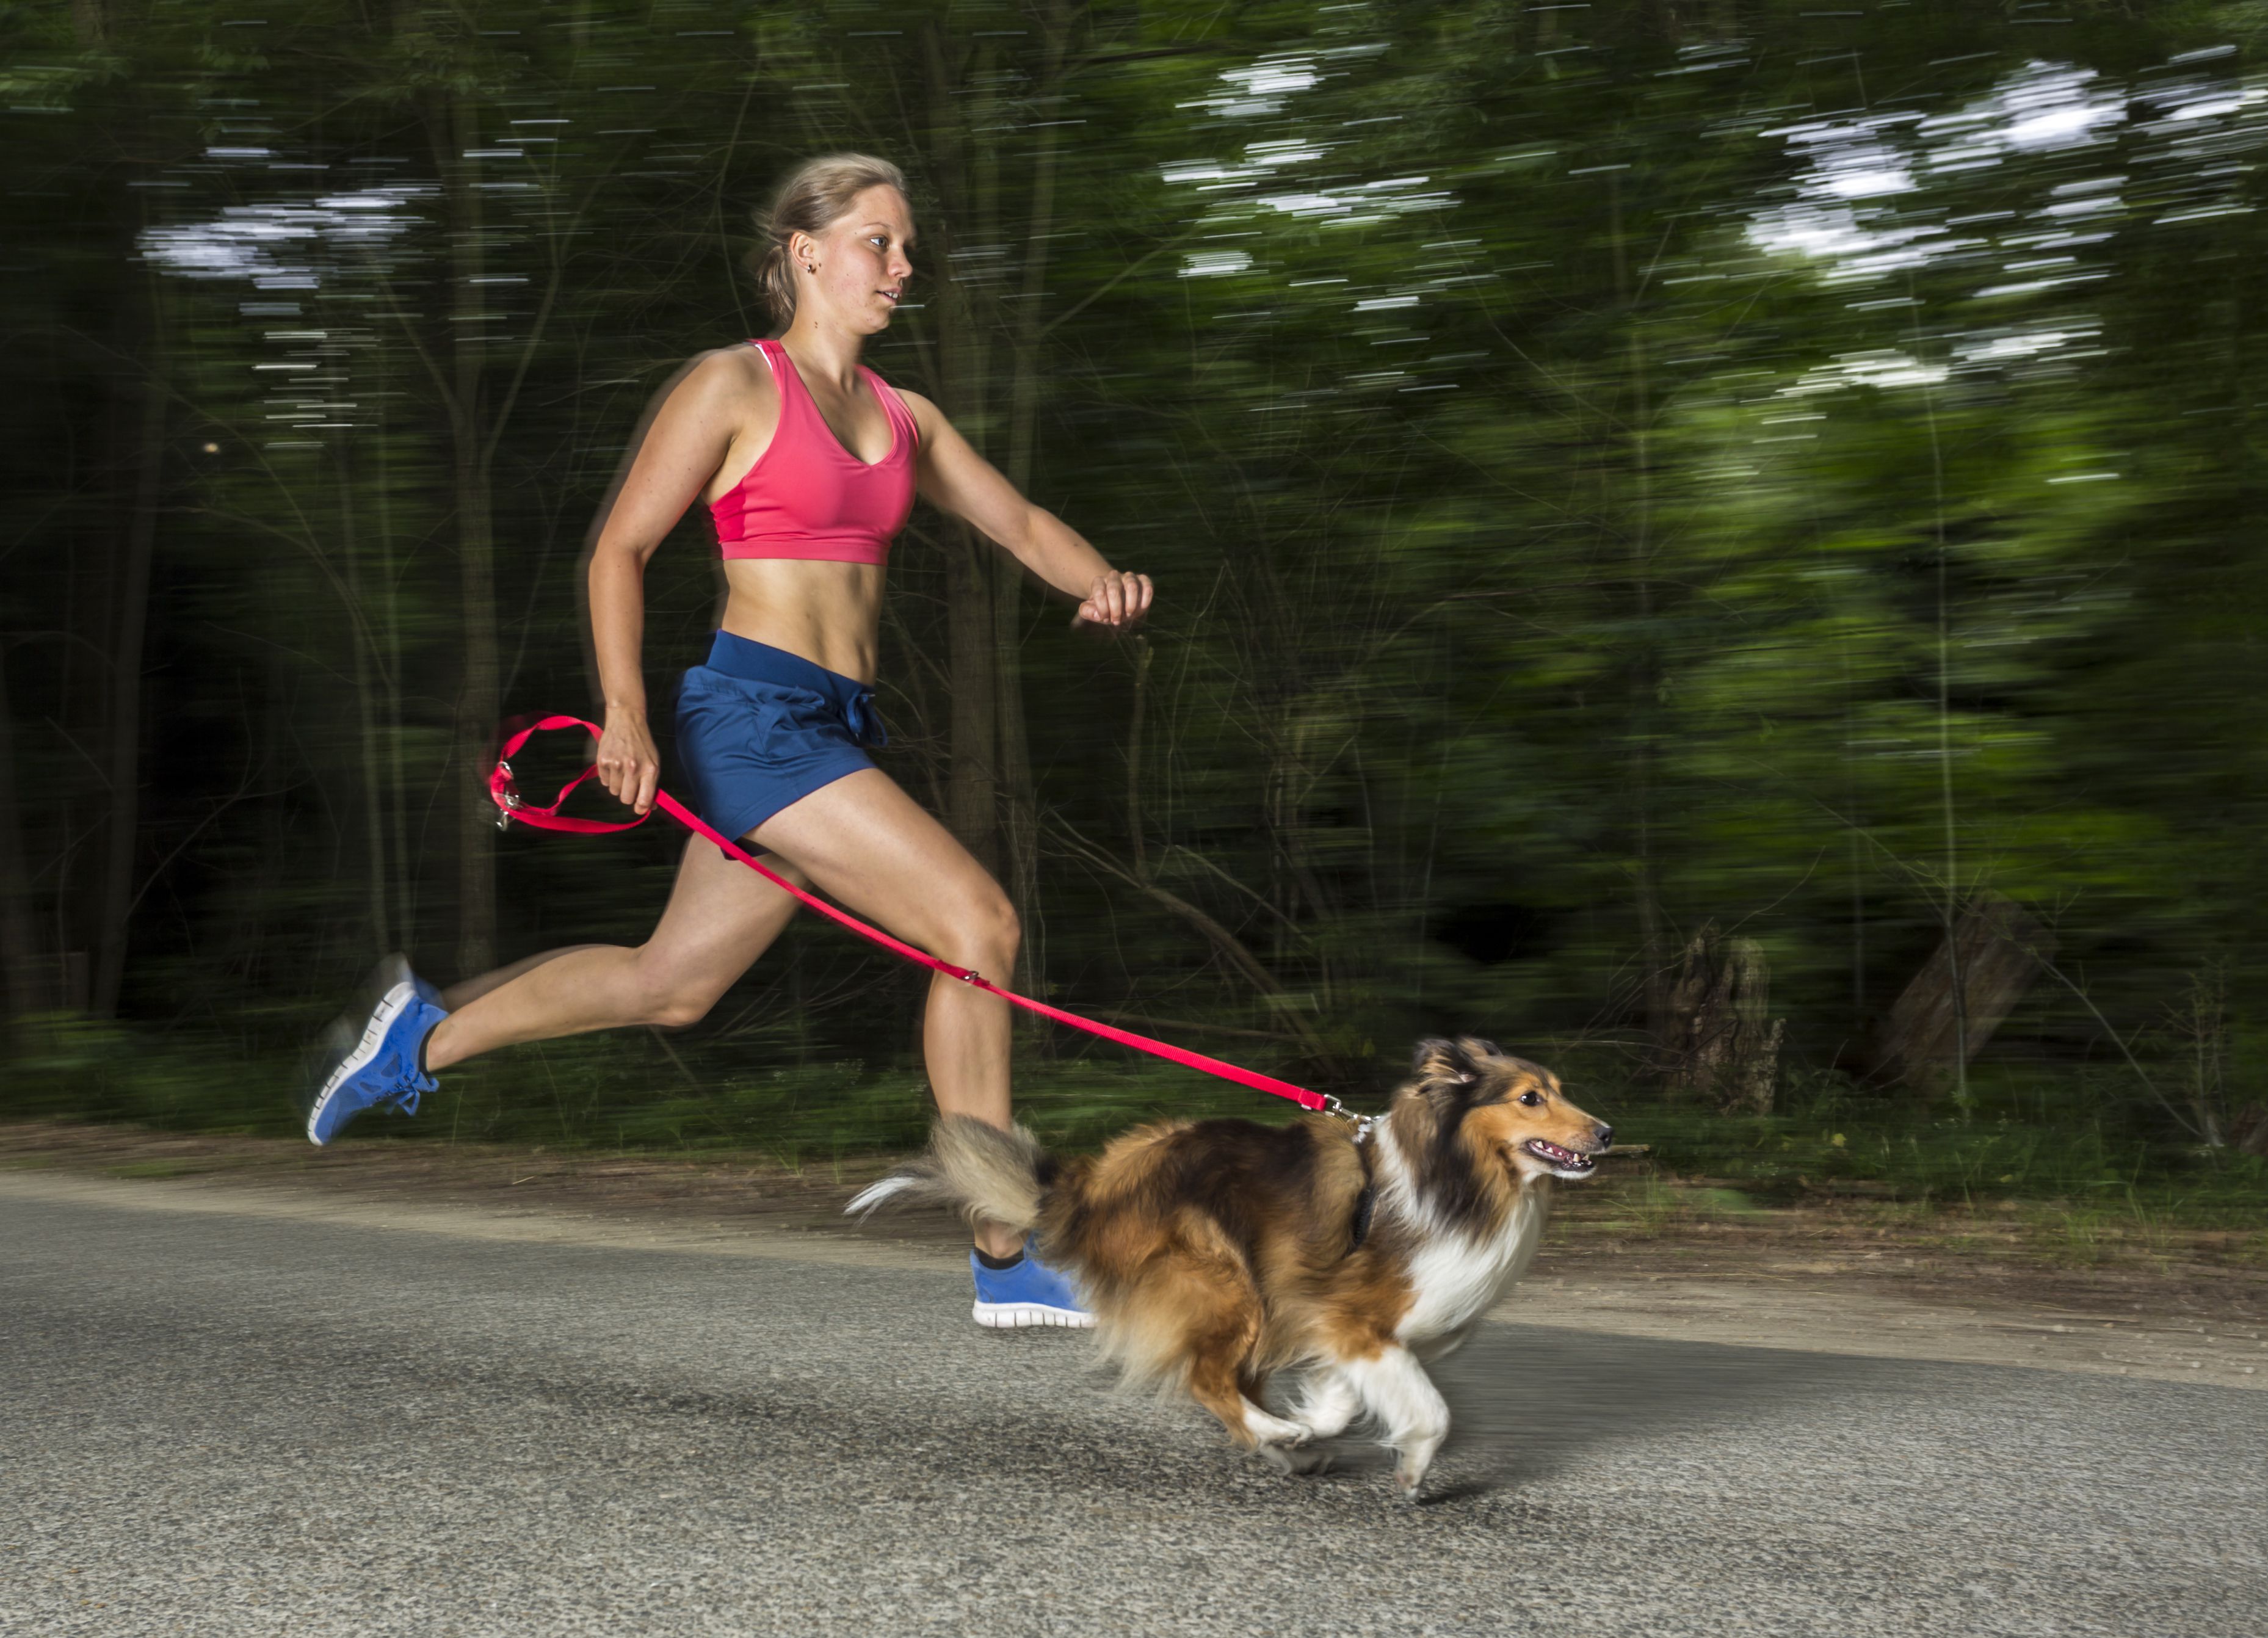 З с бега т 2. Пробежка с собакой. Девушка бежит с собакой. Человек бегает с собакой. Спорт с собакой.